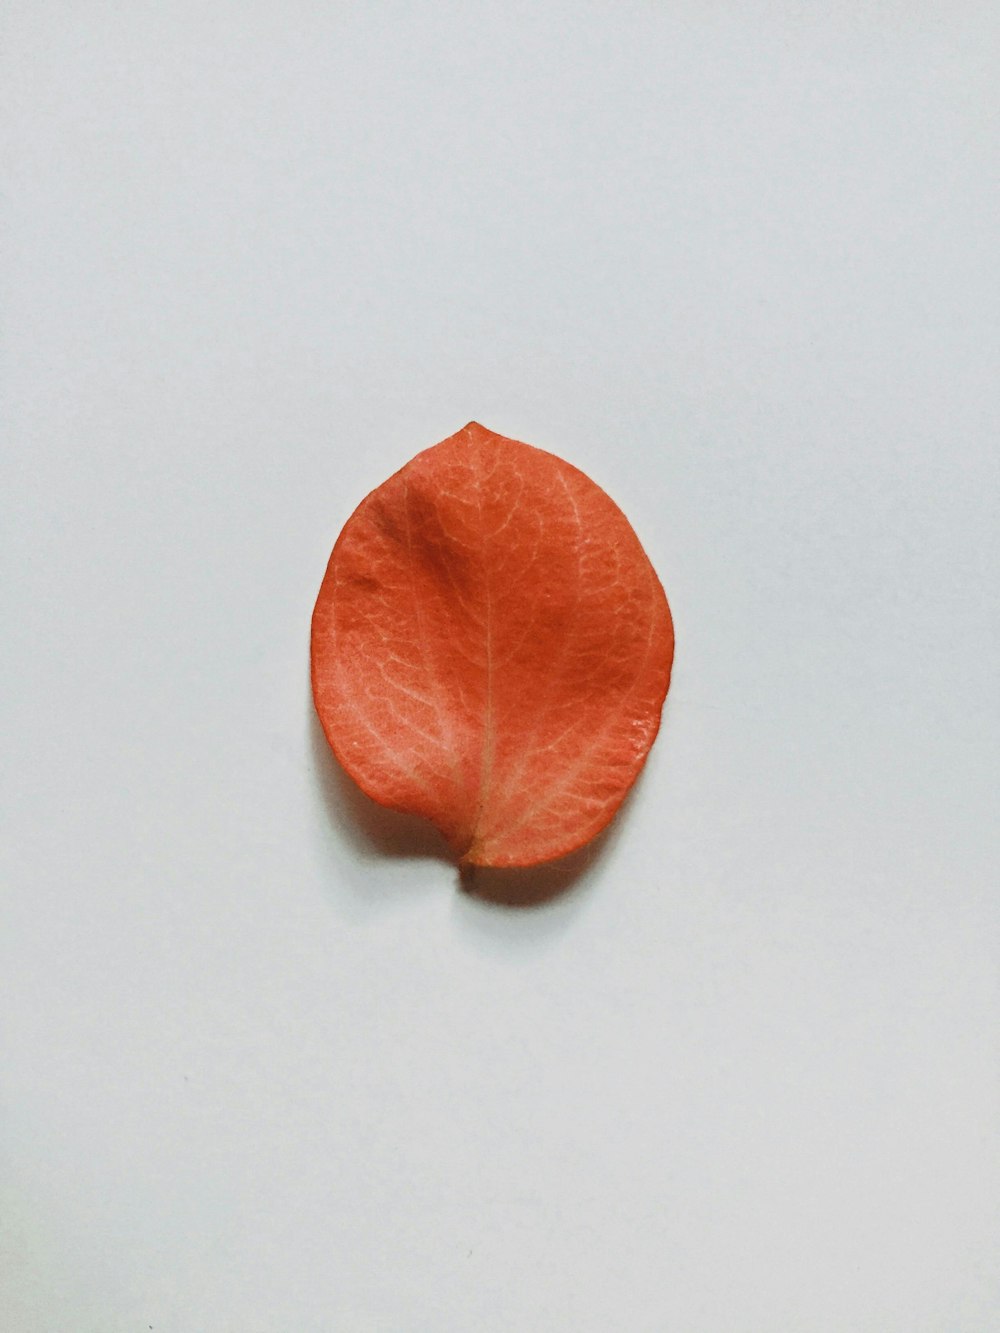 a single orange leaf on a white surface